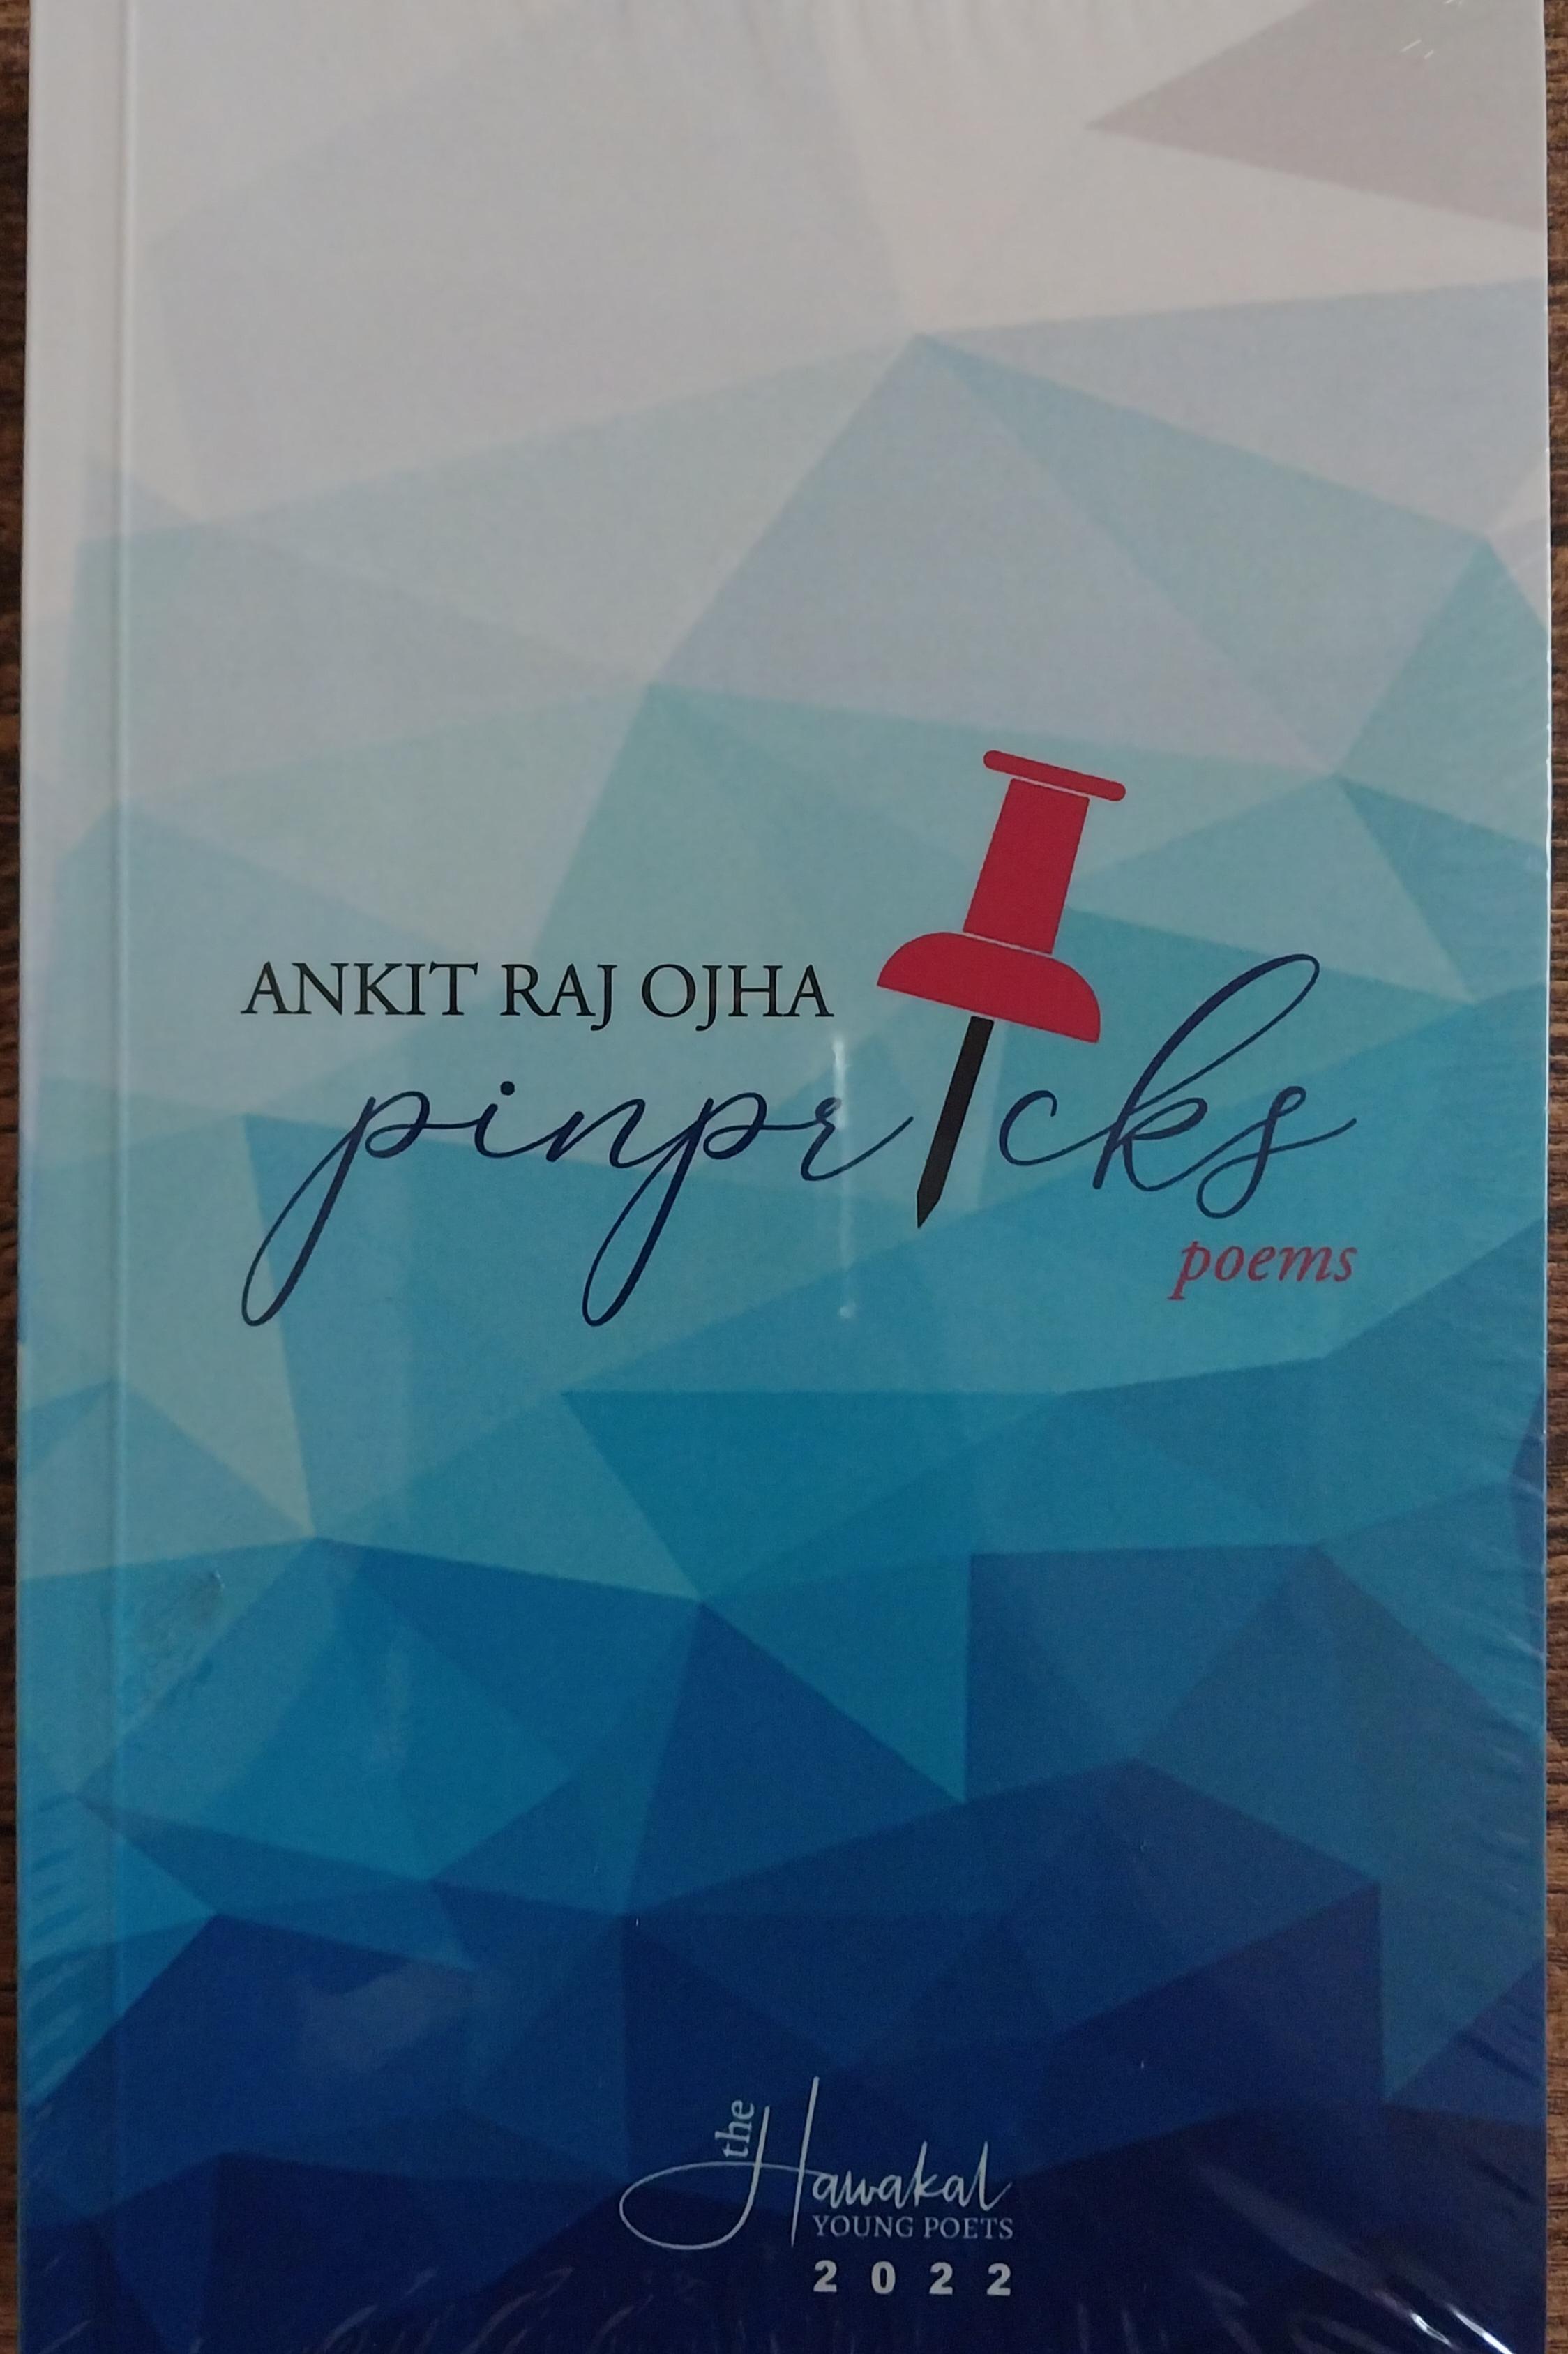 Book cover of Pinpricks (poems) by Ankit Raj Ojha